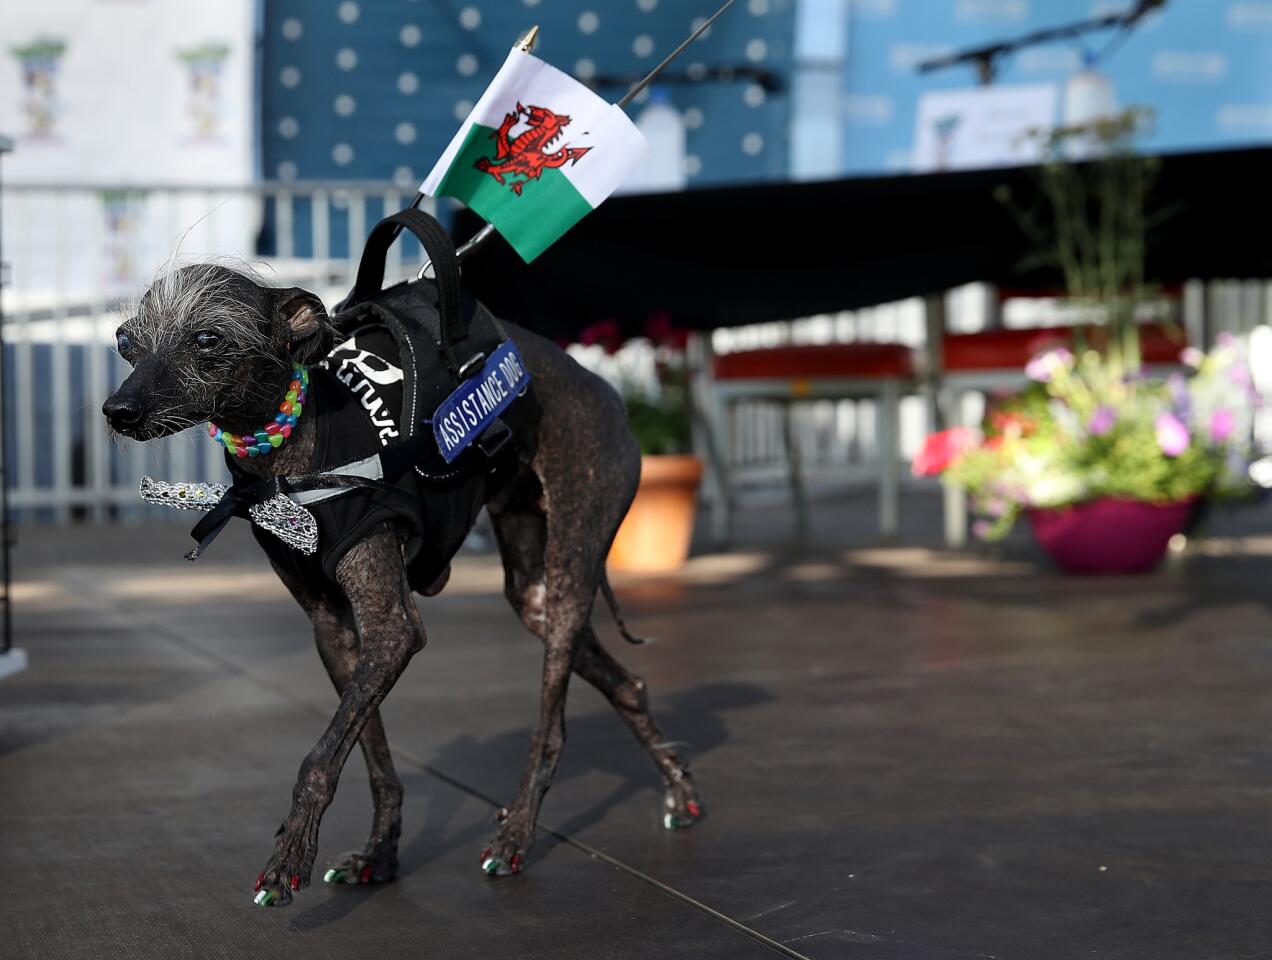 World's Ugliest Dog contest at the Sonoma-Marin Fair